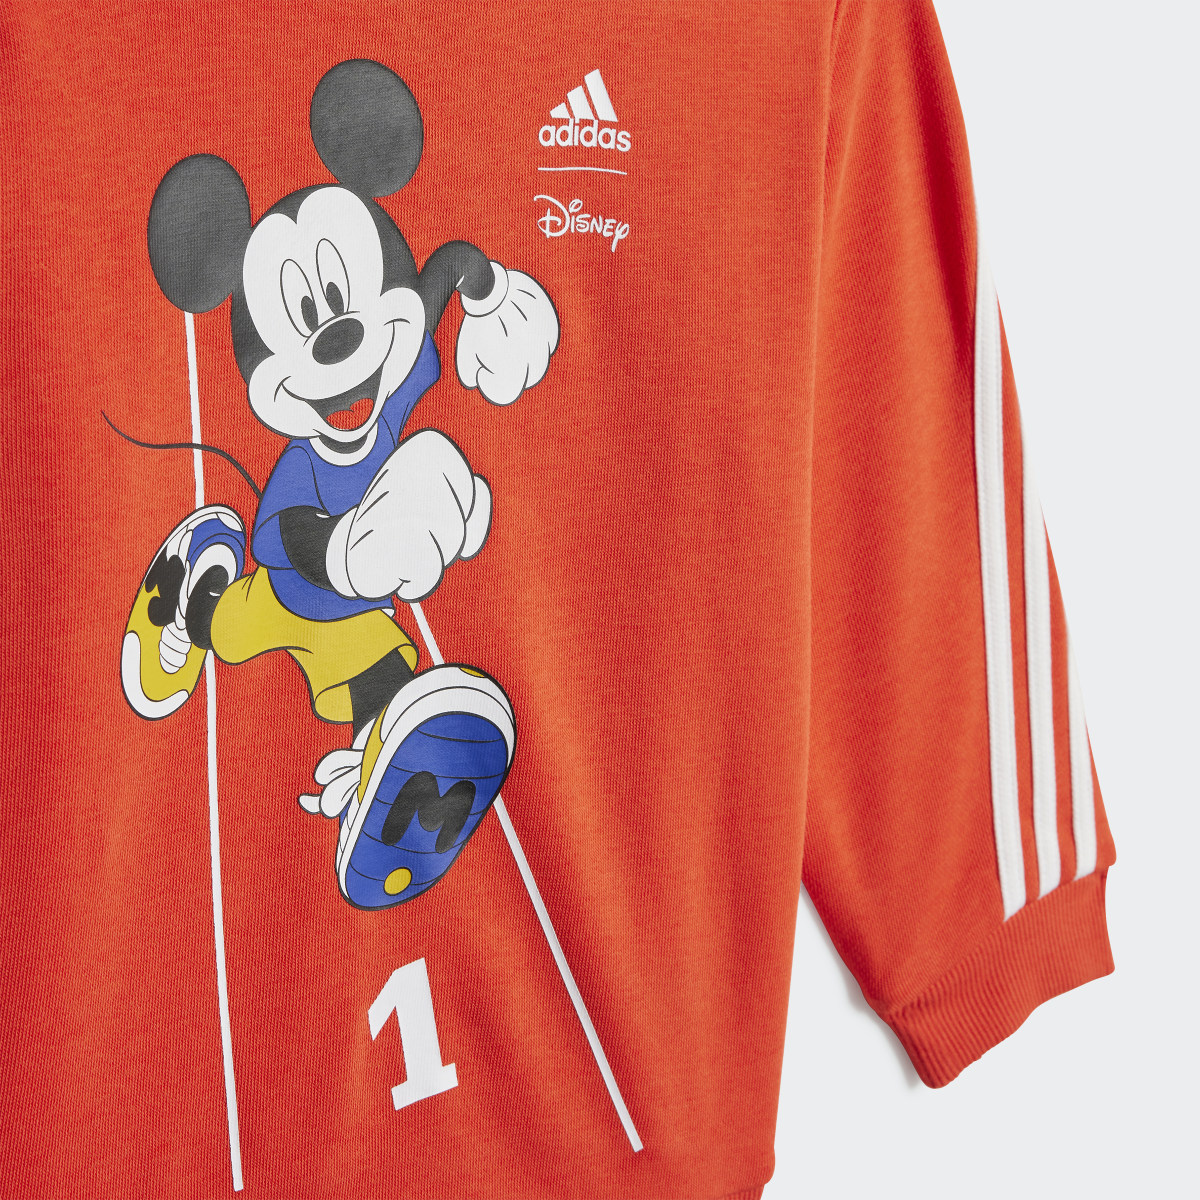 Adidas Conjunto Jogger adidas x Disney Mickey Mouse. 7